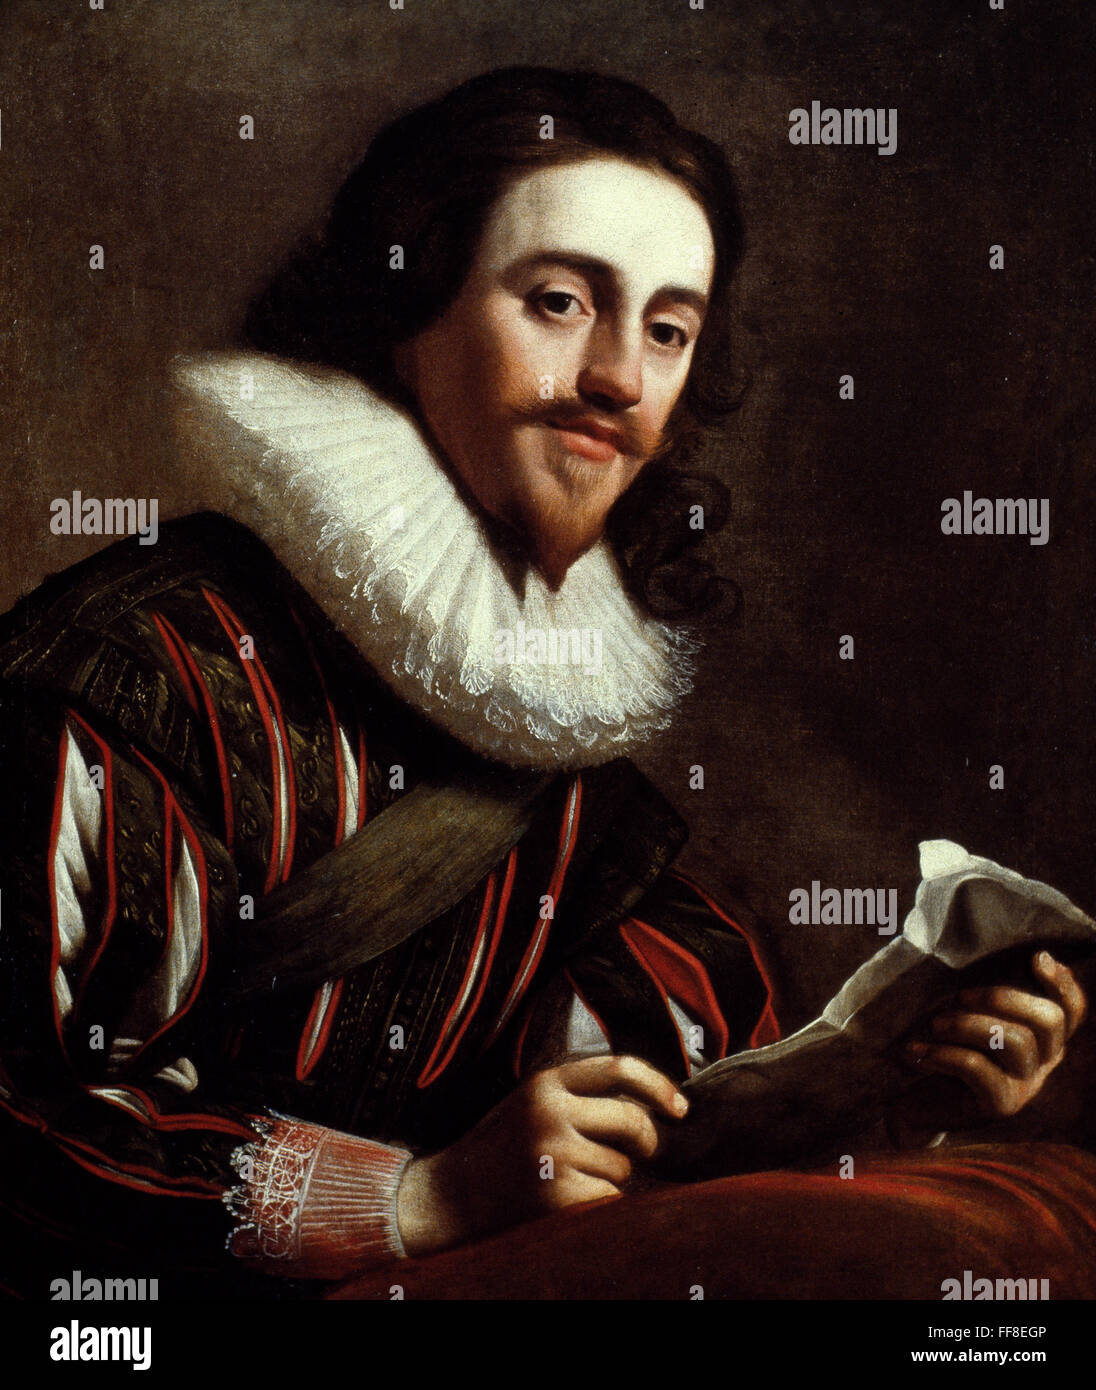 El rey Carlos I de Inglaterra /n(1600-1649). El rey de Inglaterra, Escocia e Irlanda, 1625-1649. Óleo sobre lienzo, 1628, por Gerrit van Honthorst. Foto de stock